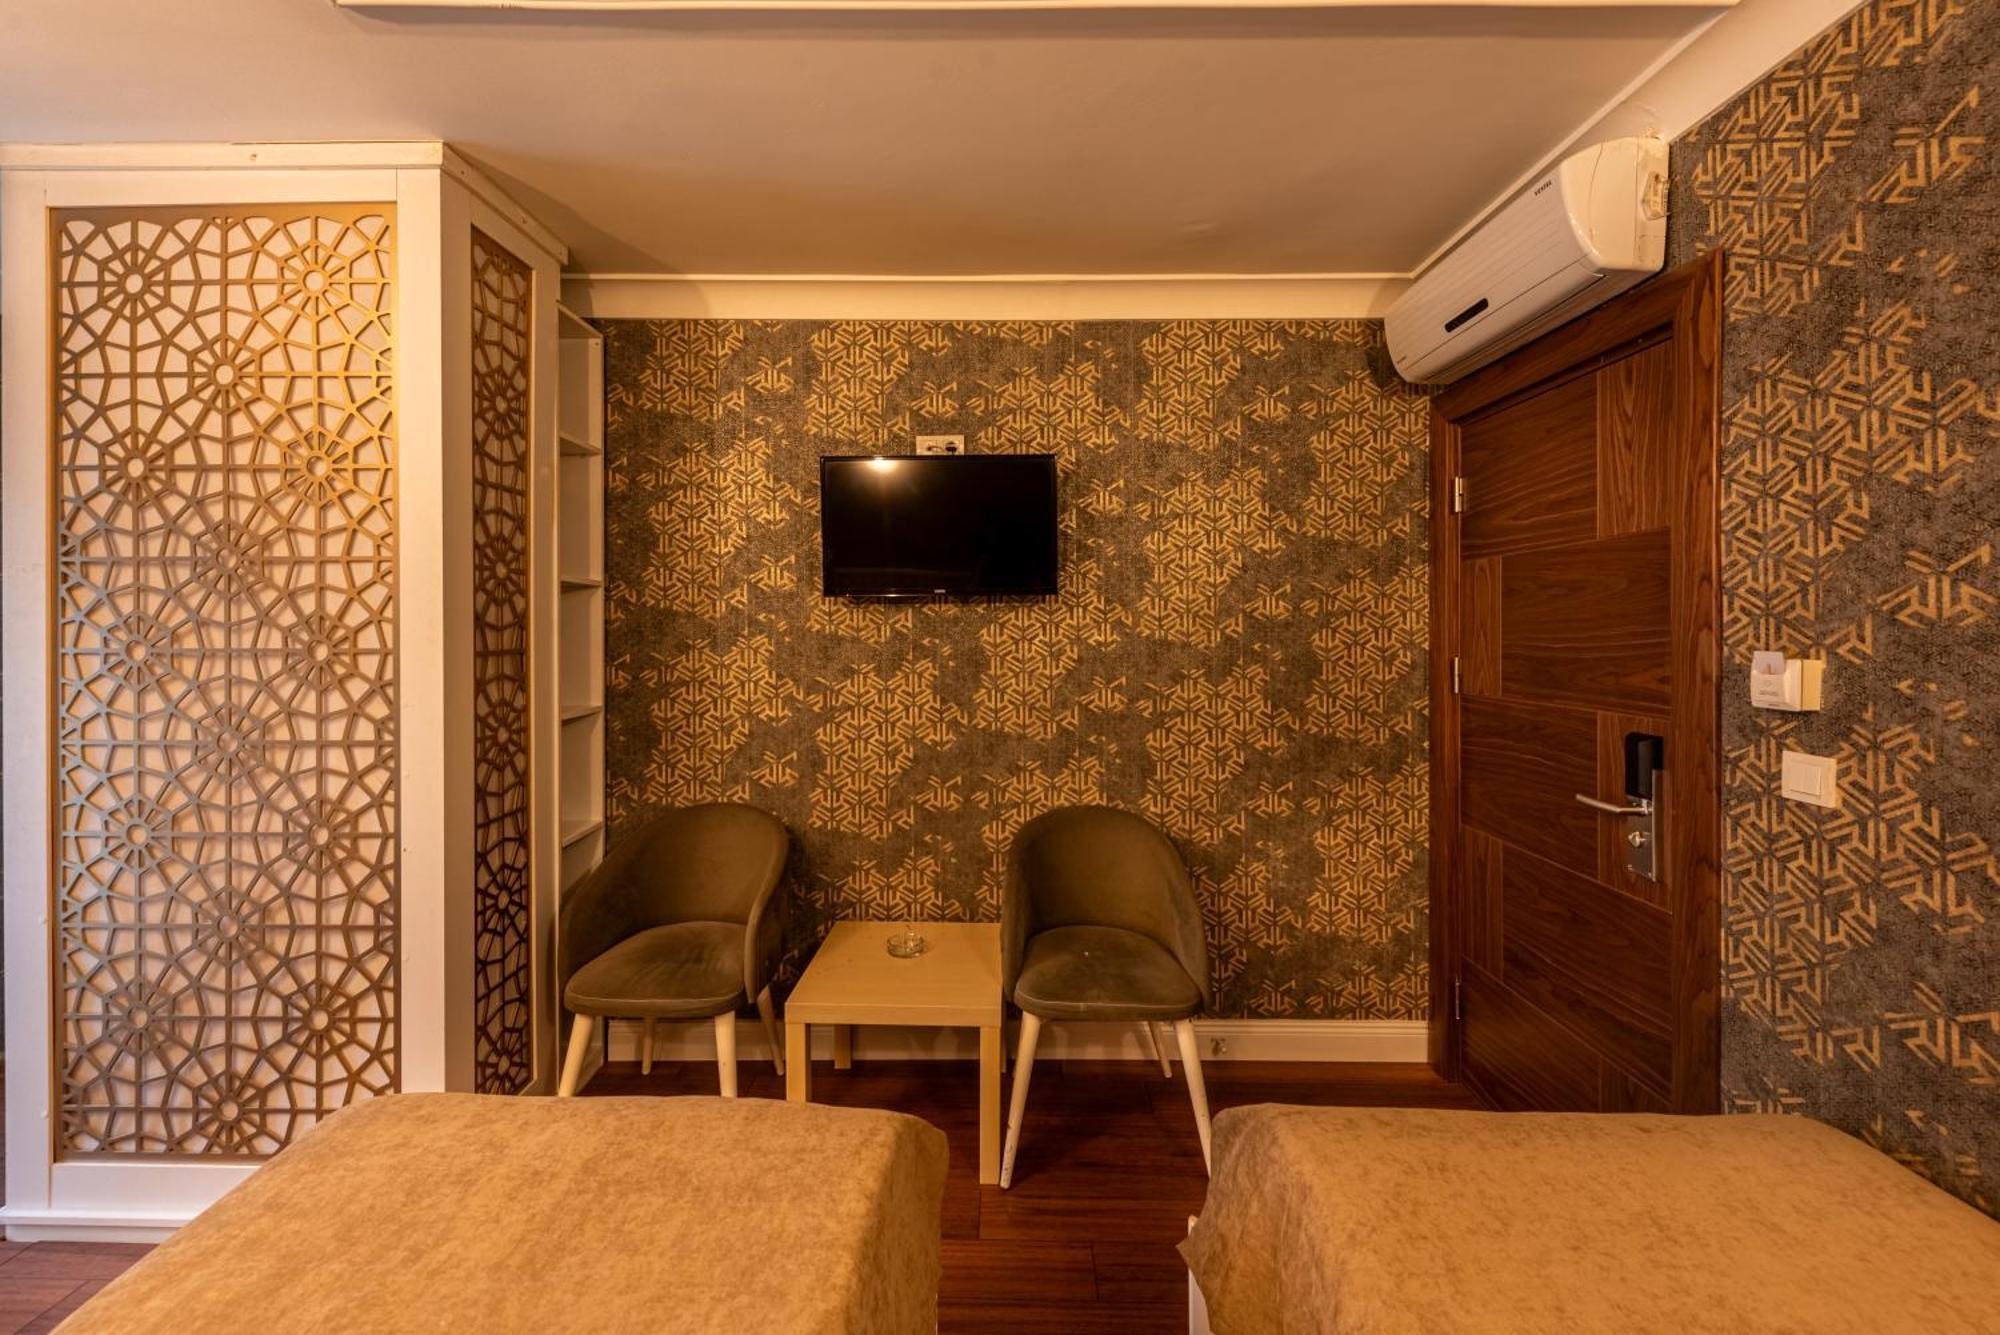 Golden Dream Otel Istanbul Exterior photo